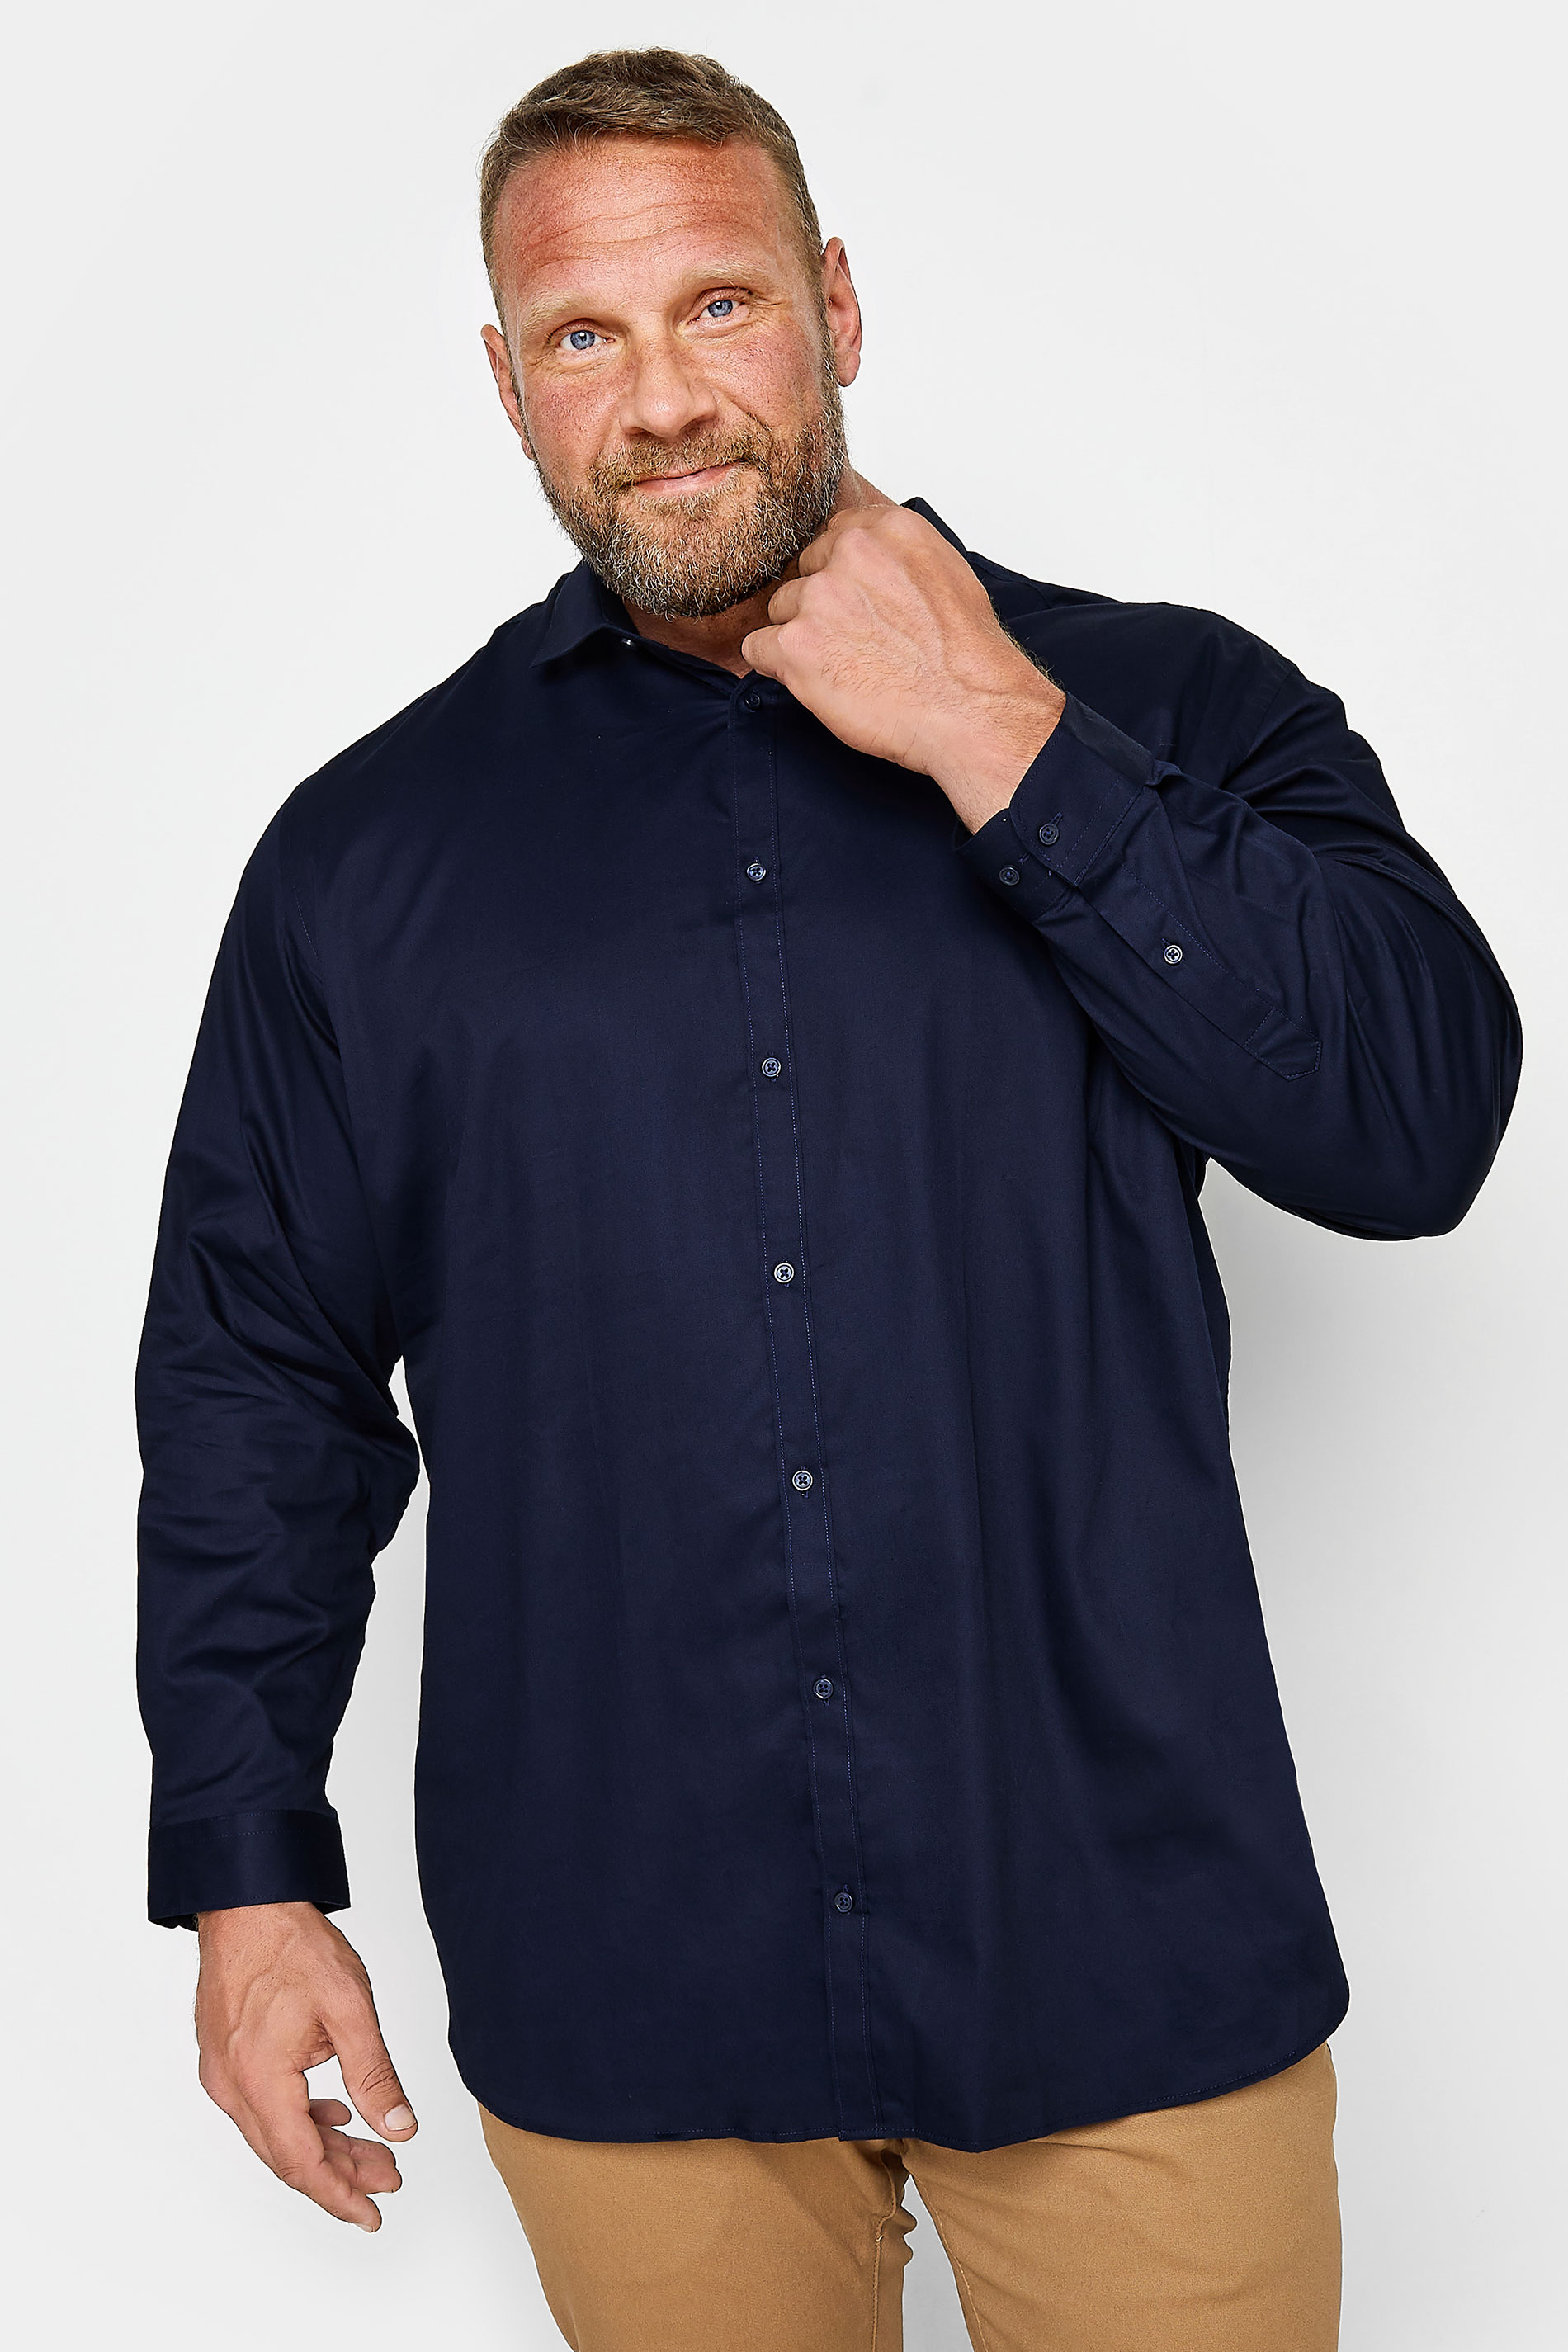 Image of Size 1Xl Mens Jack & Jones Big & Tall Navy Blue Shirt Big & Tall